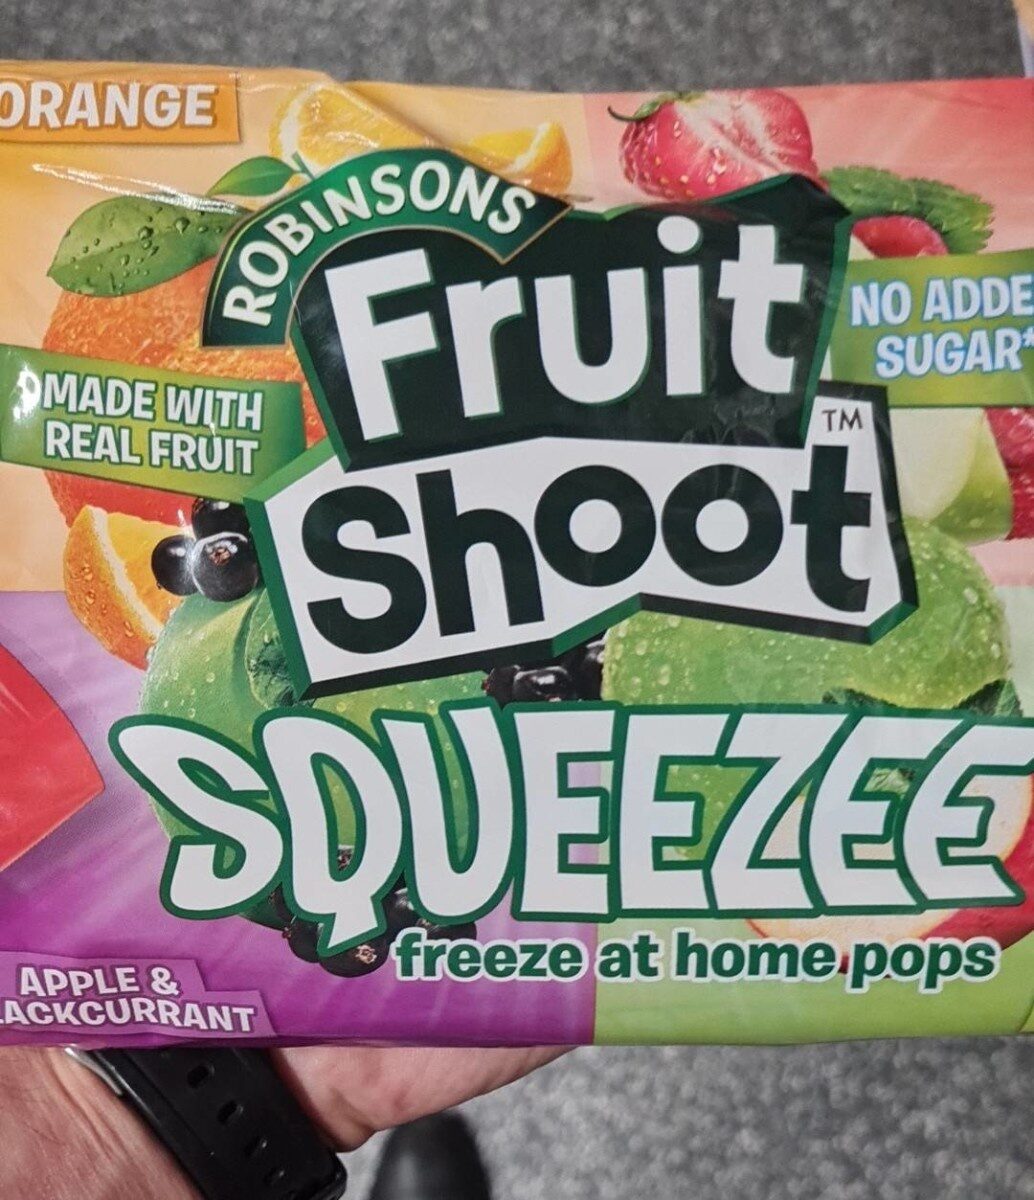 Fruit shoot squeezee - Produit - en